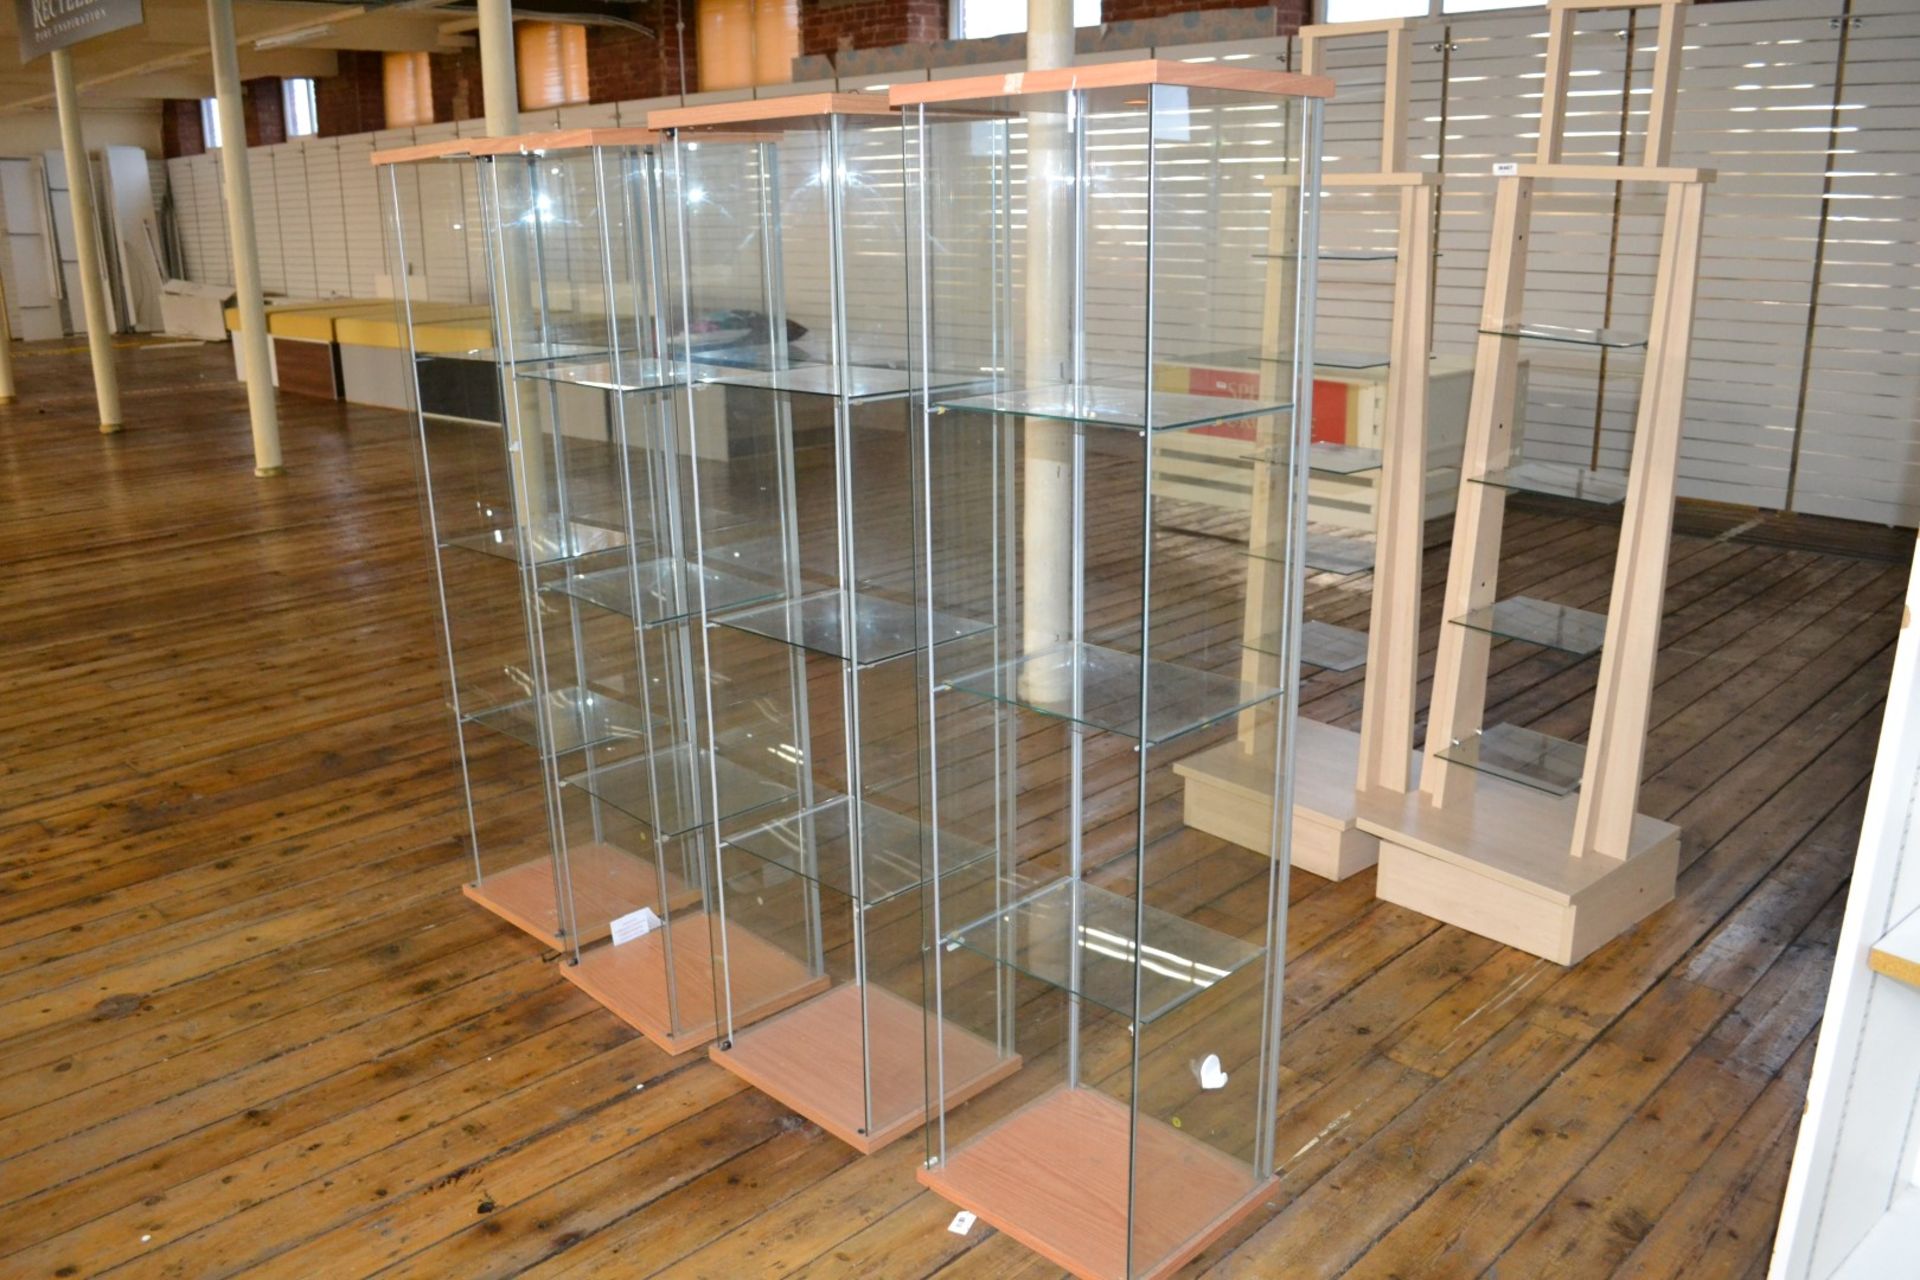 6 x Upright Glass Display Cabinets - M532 - CL351 - Location: Chorley PR6 The winning bidder is